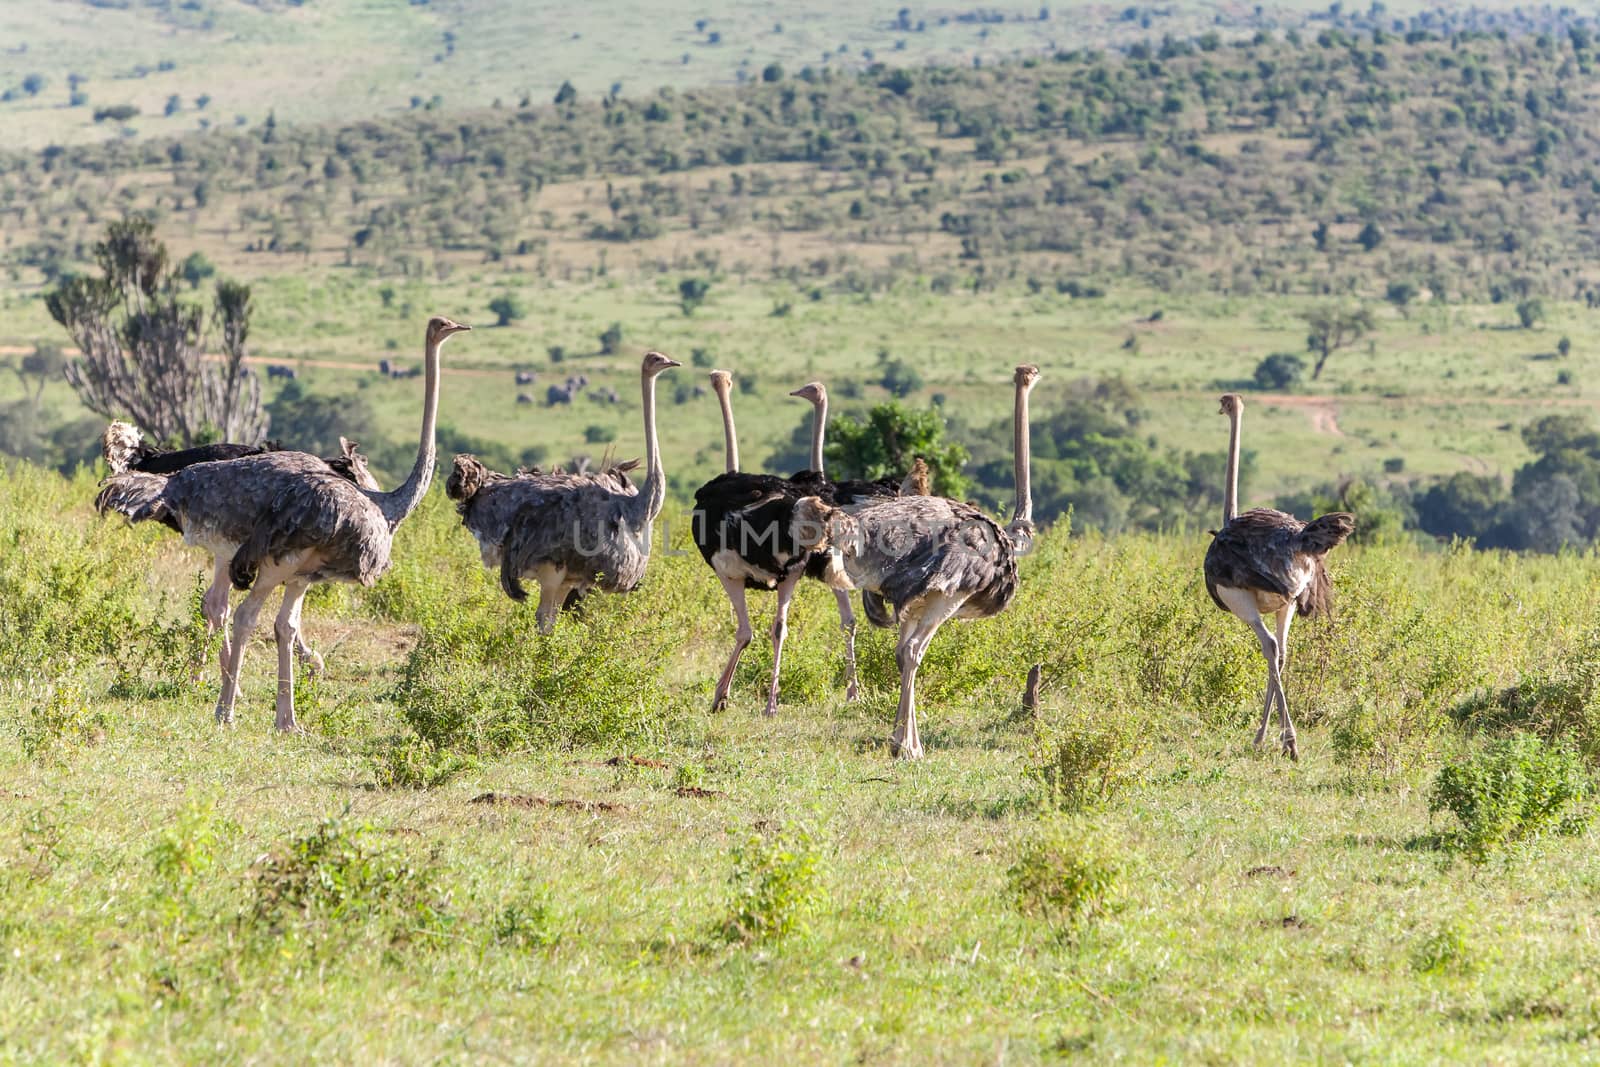 Ostriches  walking on savanna in Africa. Safari. Kenya by master1305